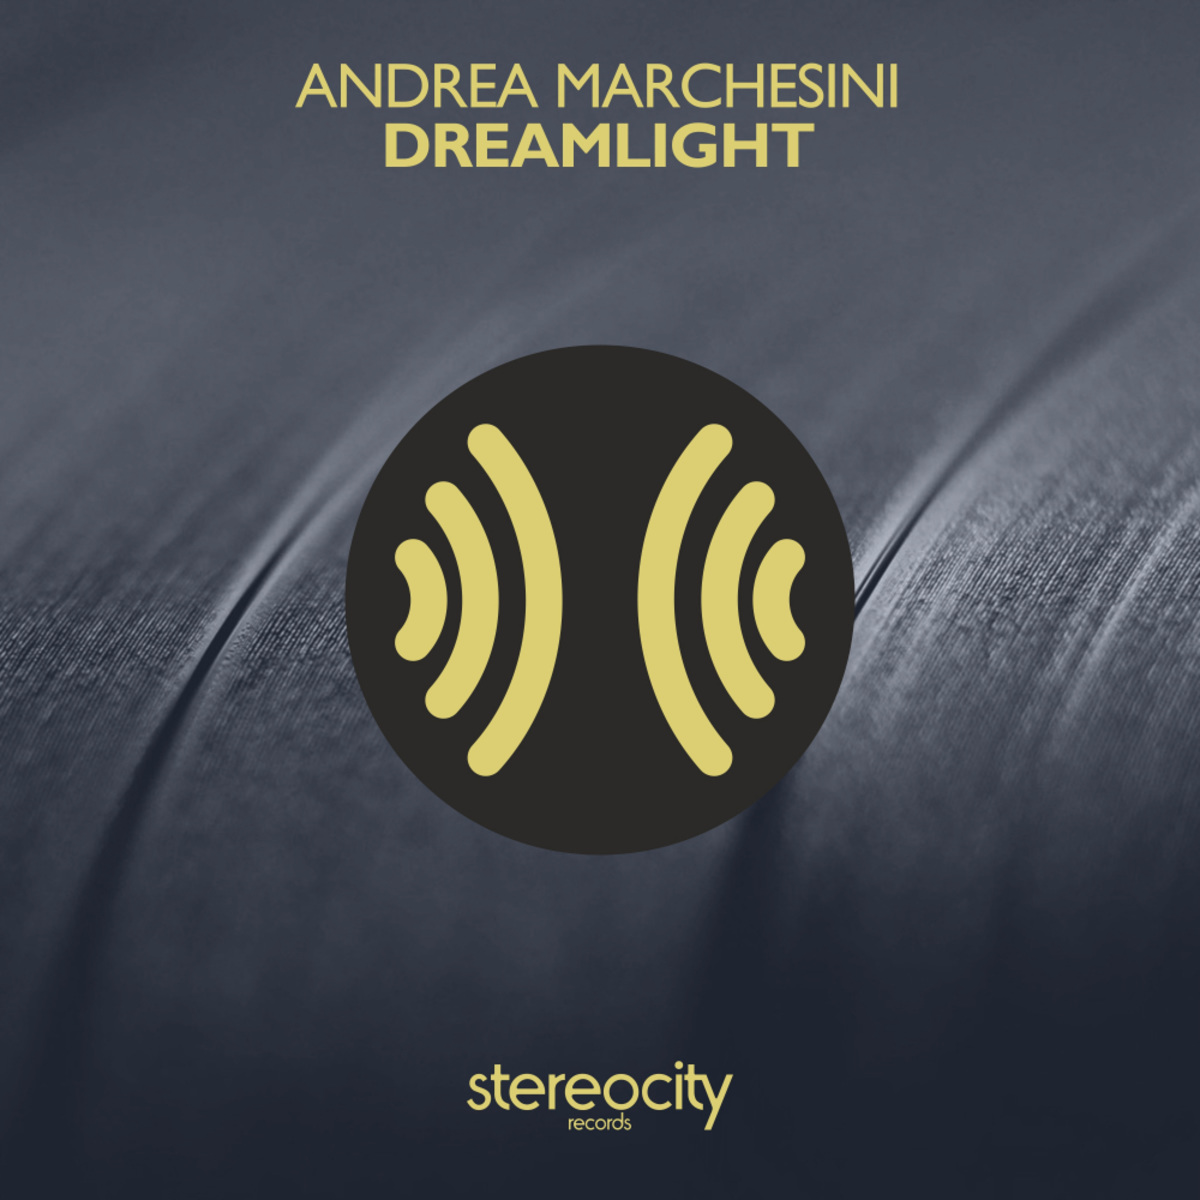 Andrea Marchesini - Dreamlight / Stereocity